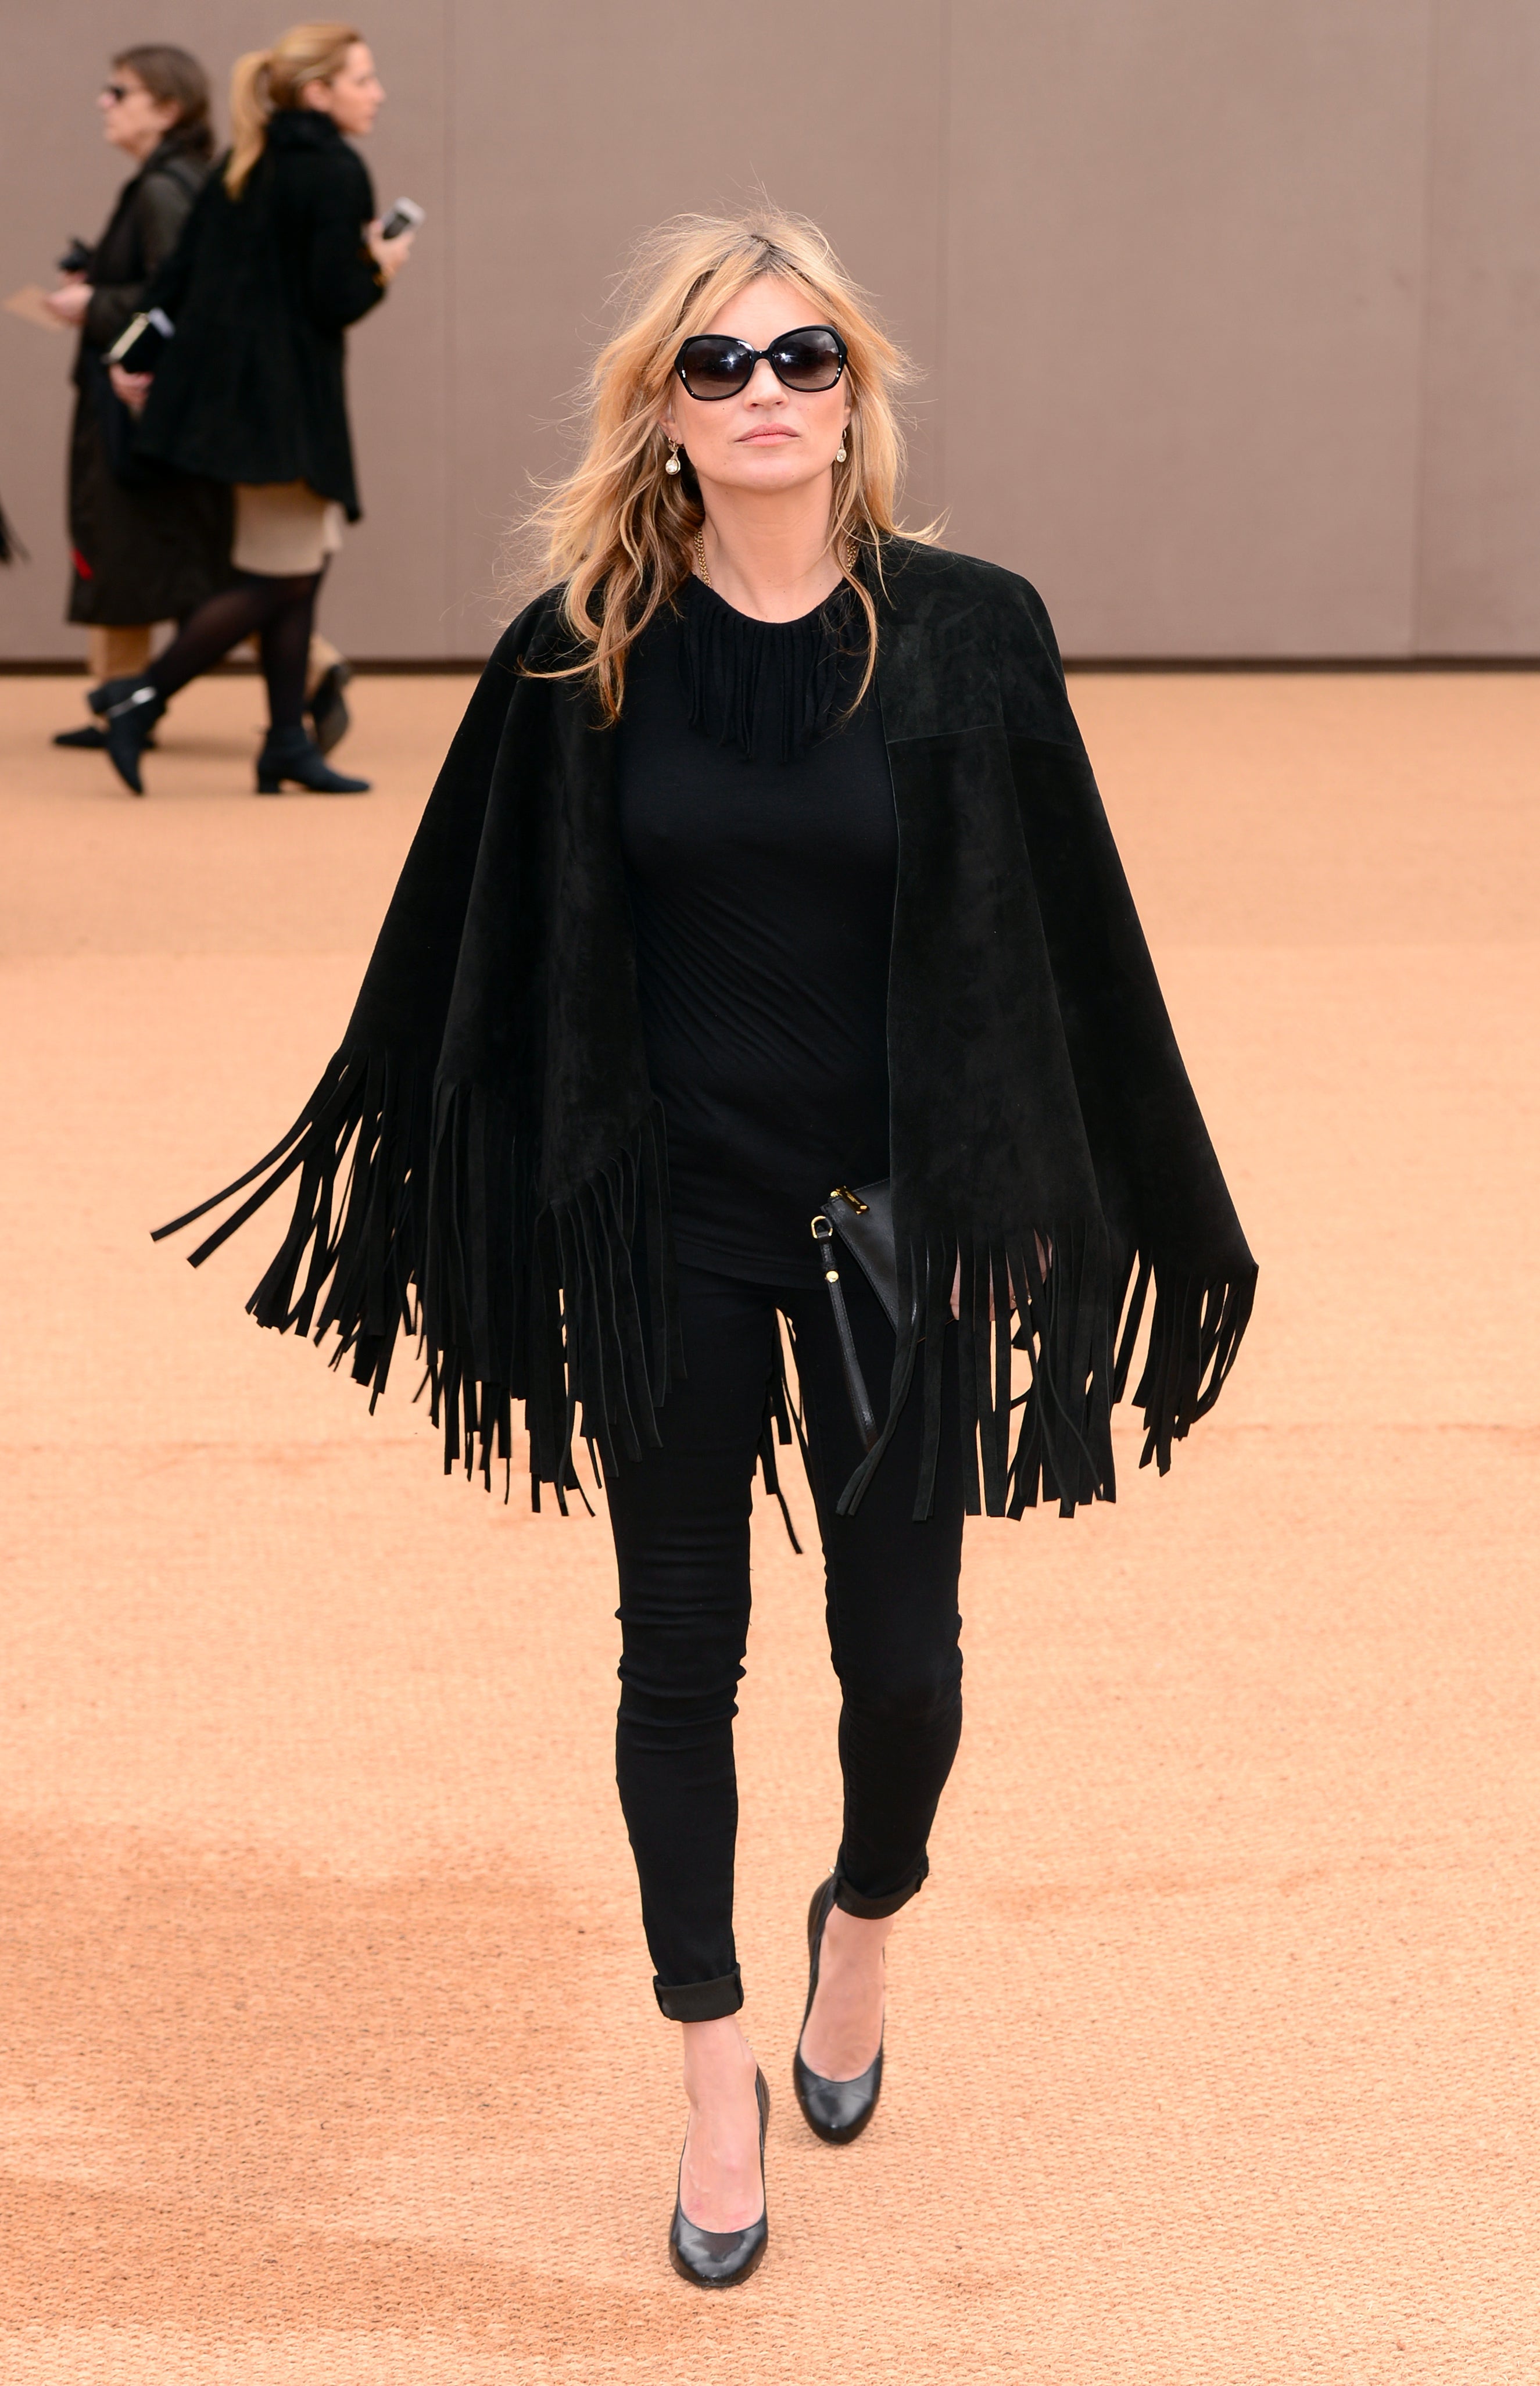 Kate Moss arriving for the Burberry Prorsum womenswear catwalk show at Kensington Gardens, as part of London Fashion Week